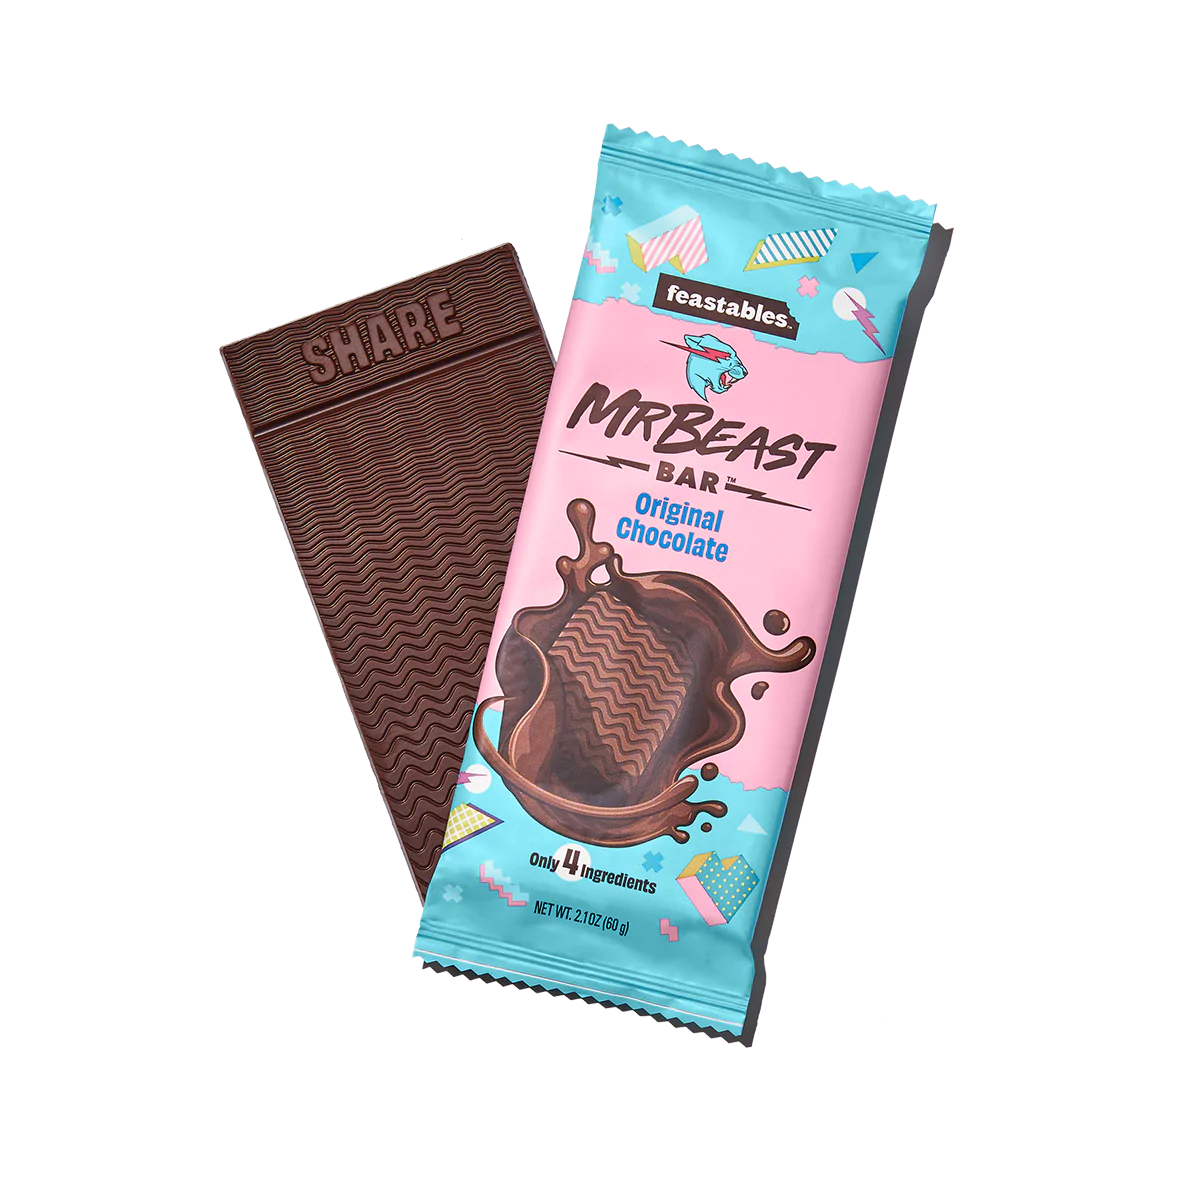 Mr Beast Feastables Chocolate Bar Original Flavour (60g)